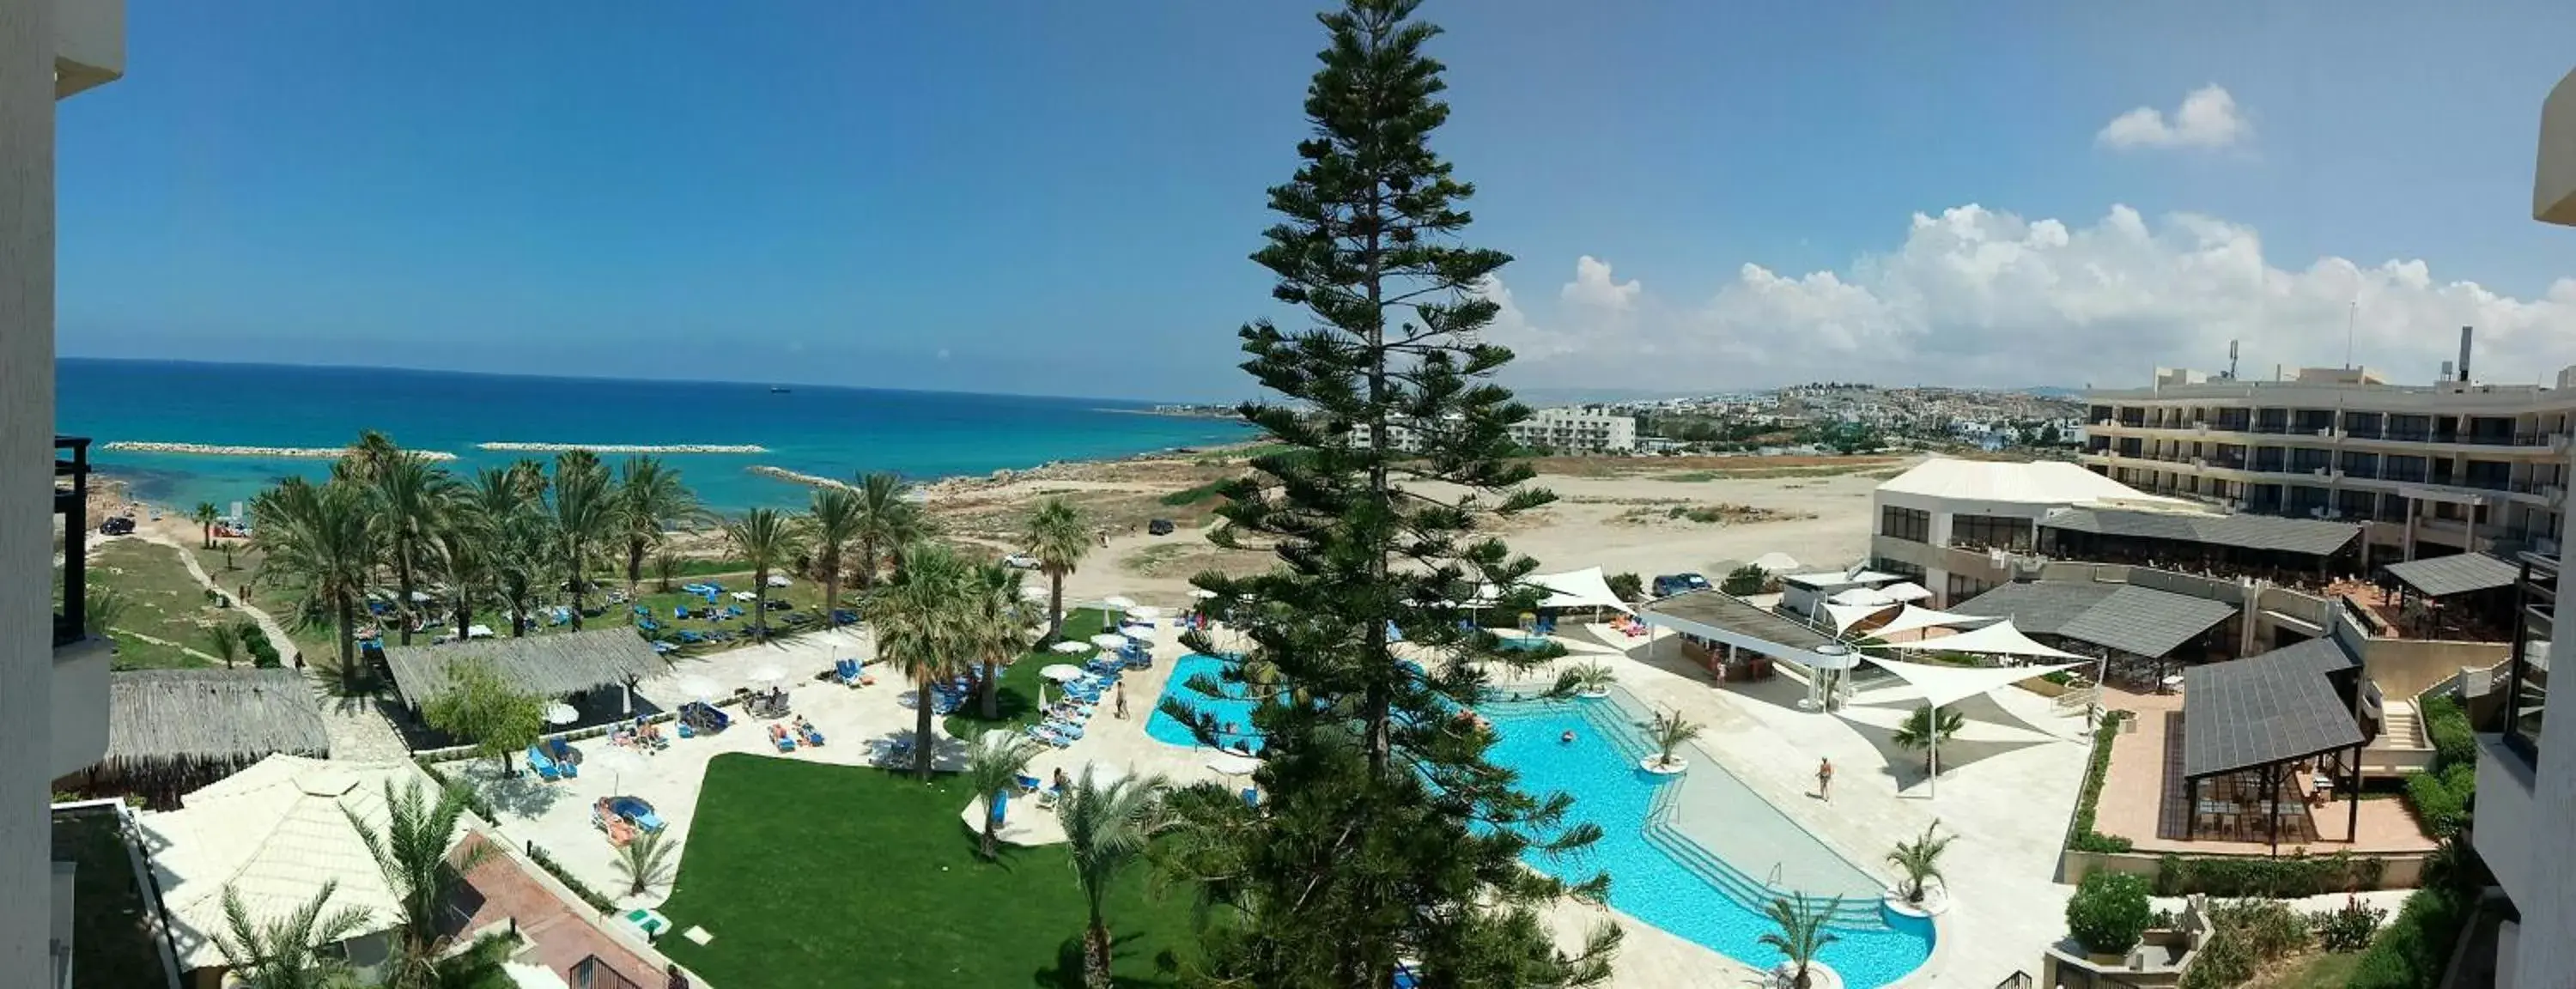 Pool view, Bird's-eye View in Venus Beach Hotel